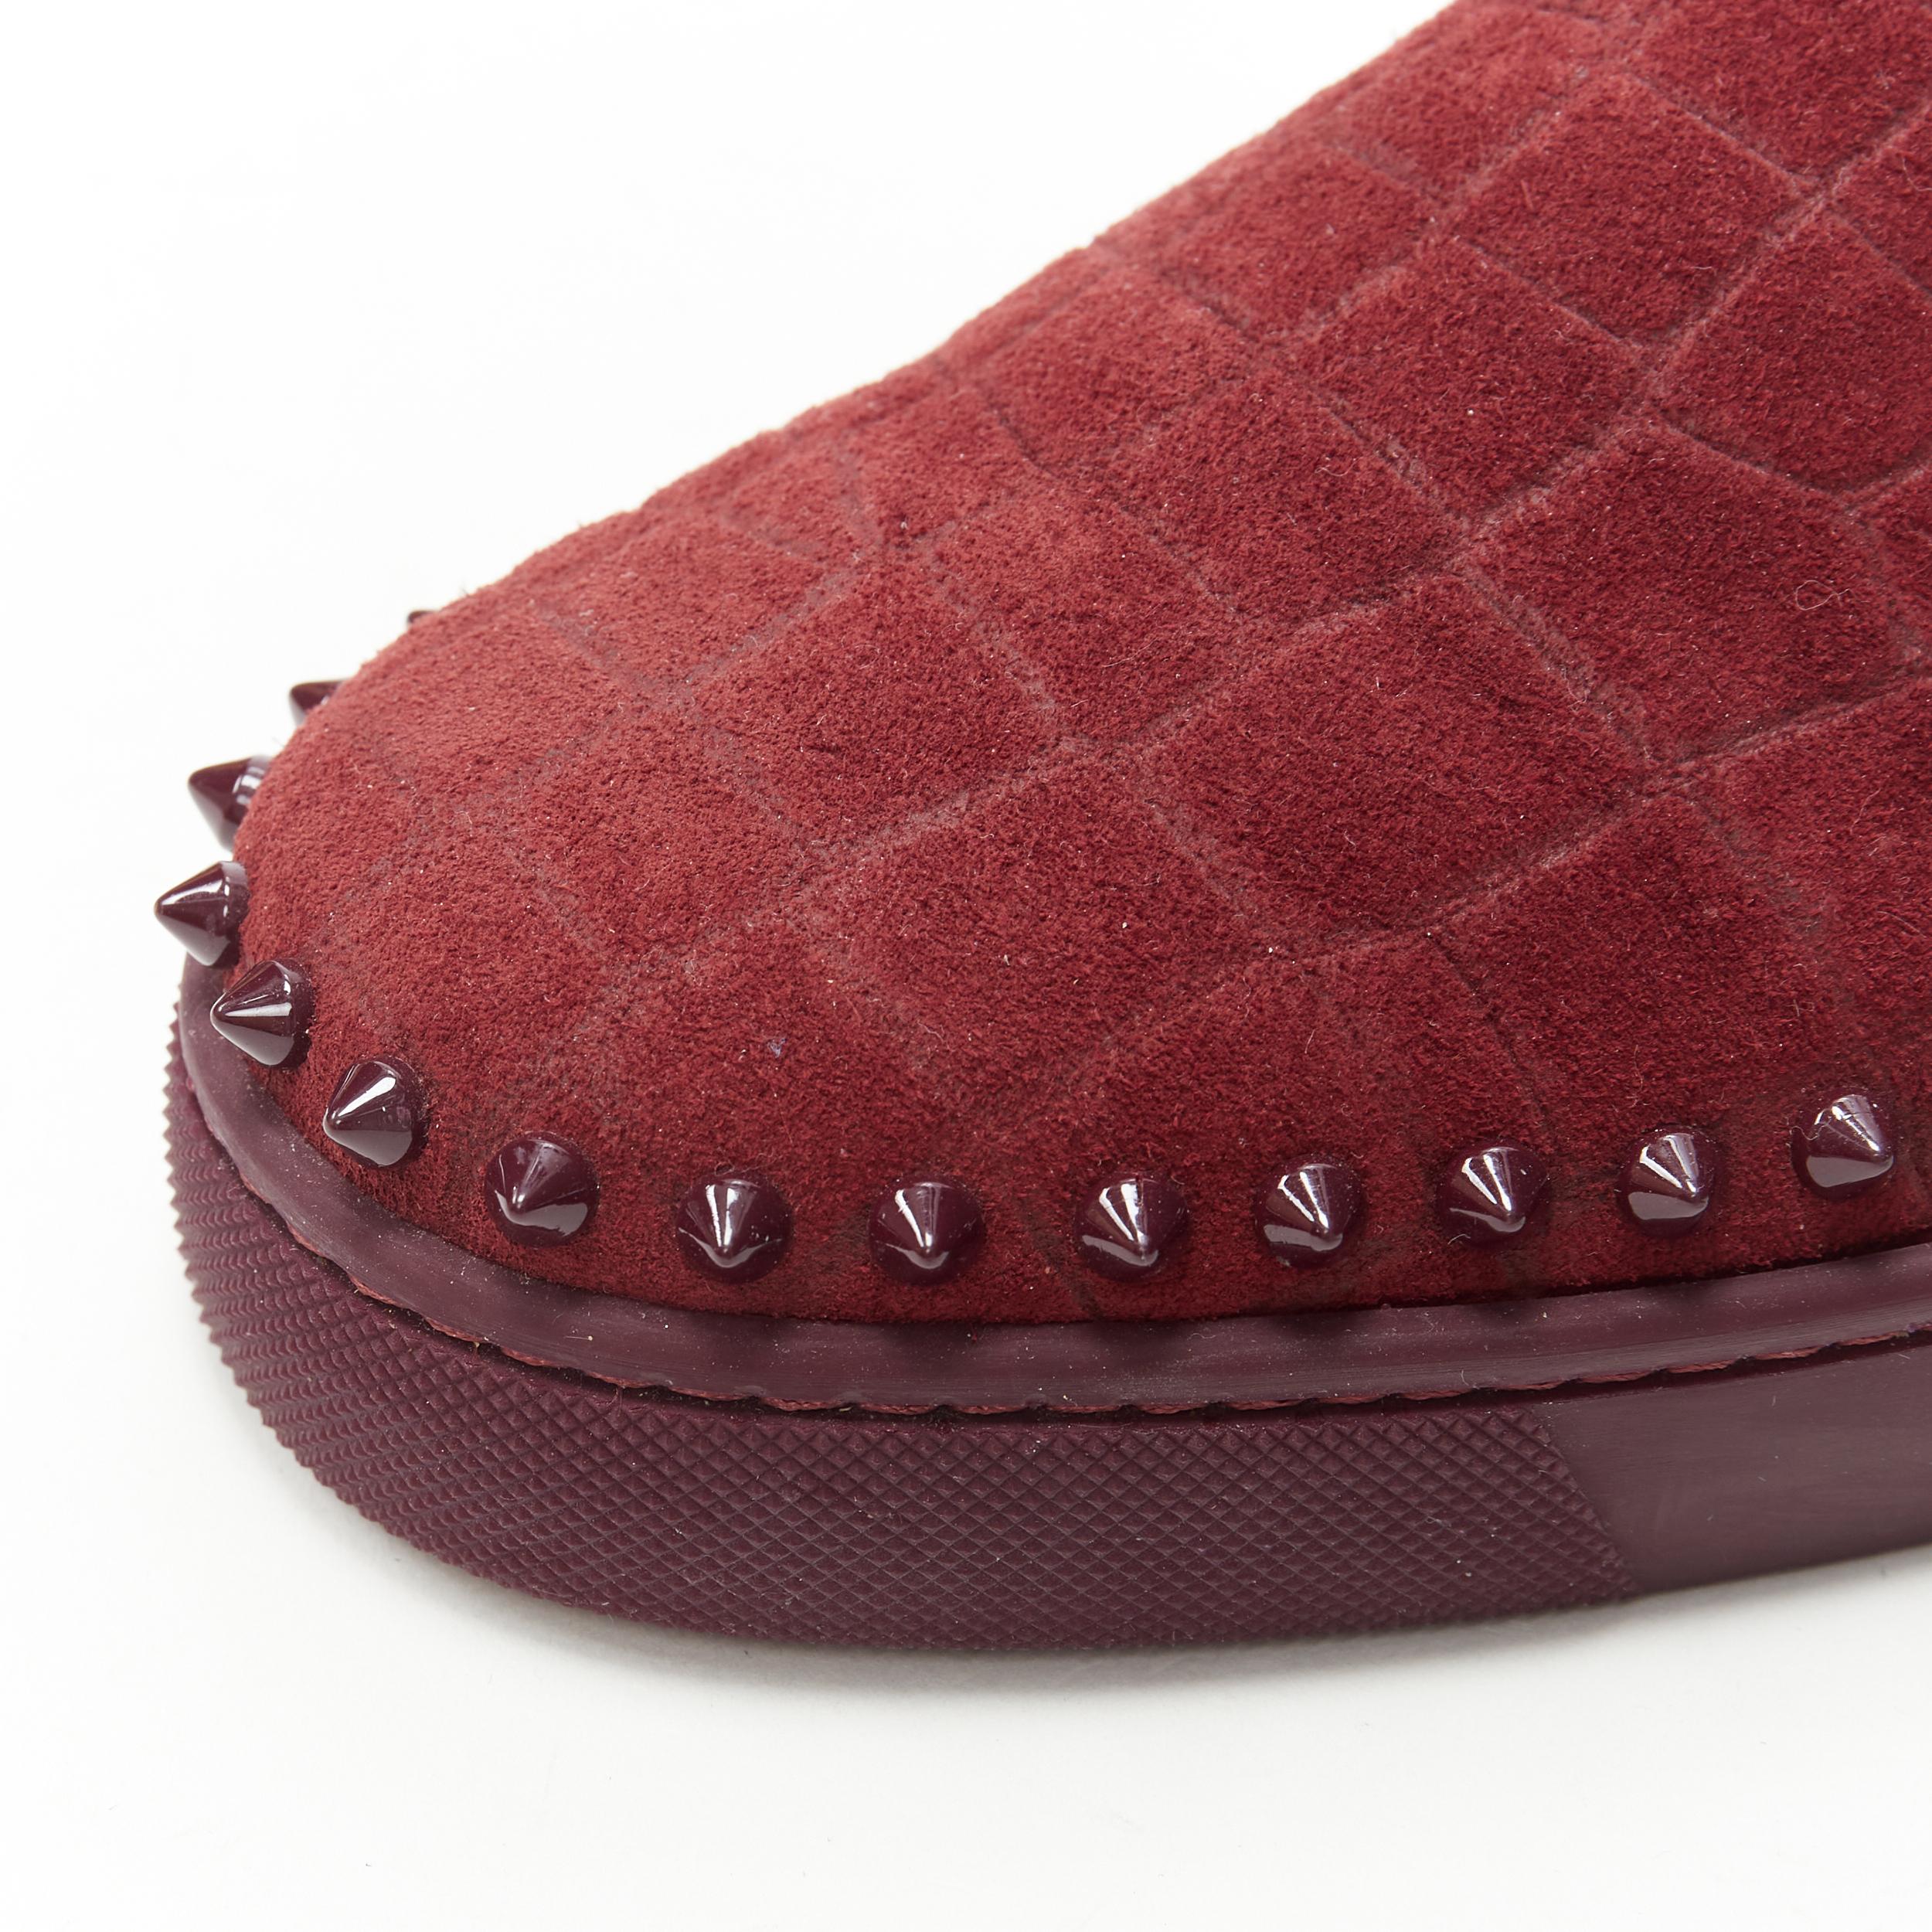 CHRISTIAN LOUBOUTIN Pik Boat burgundy croc suede spike stud low top sneaker EU41 For Sale 3